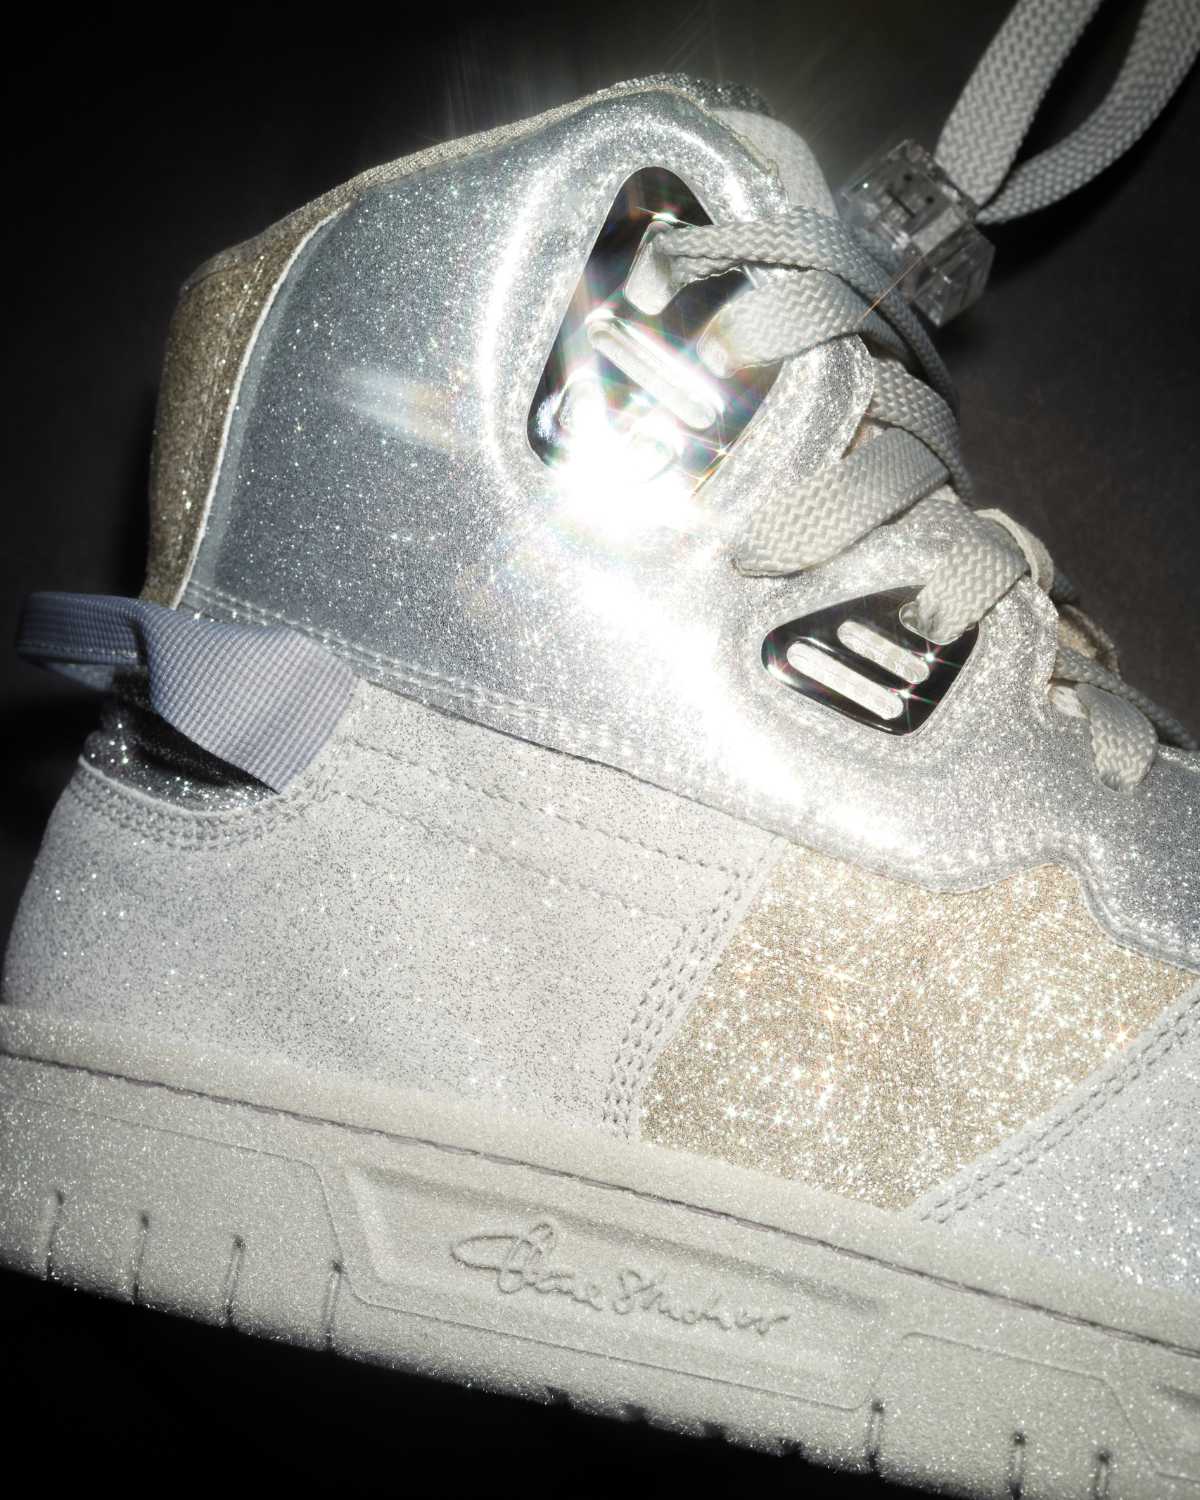 Acne Studios Presents New 08STHLM Sneaker Style In Glitter Silver